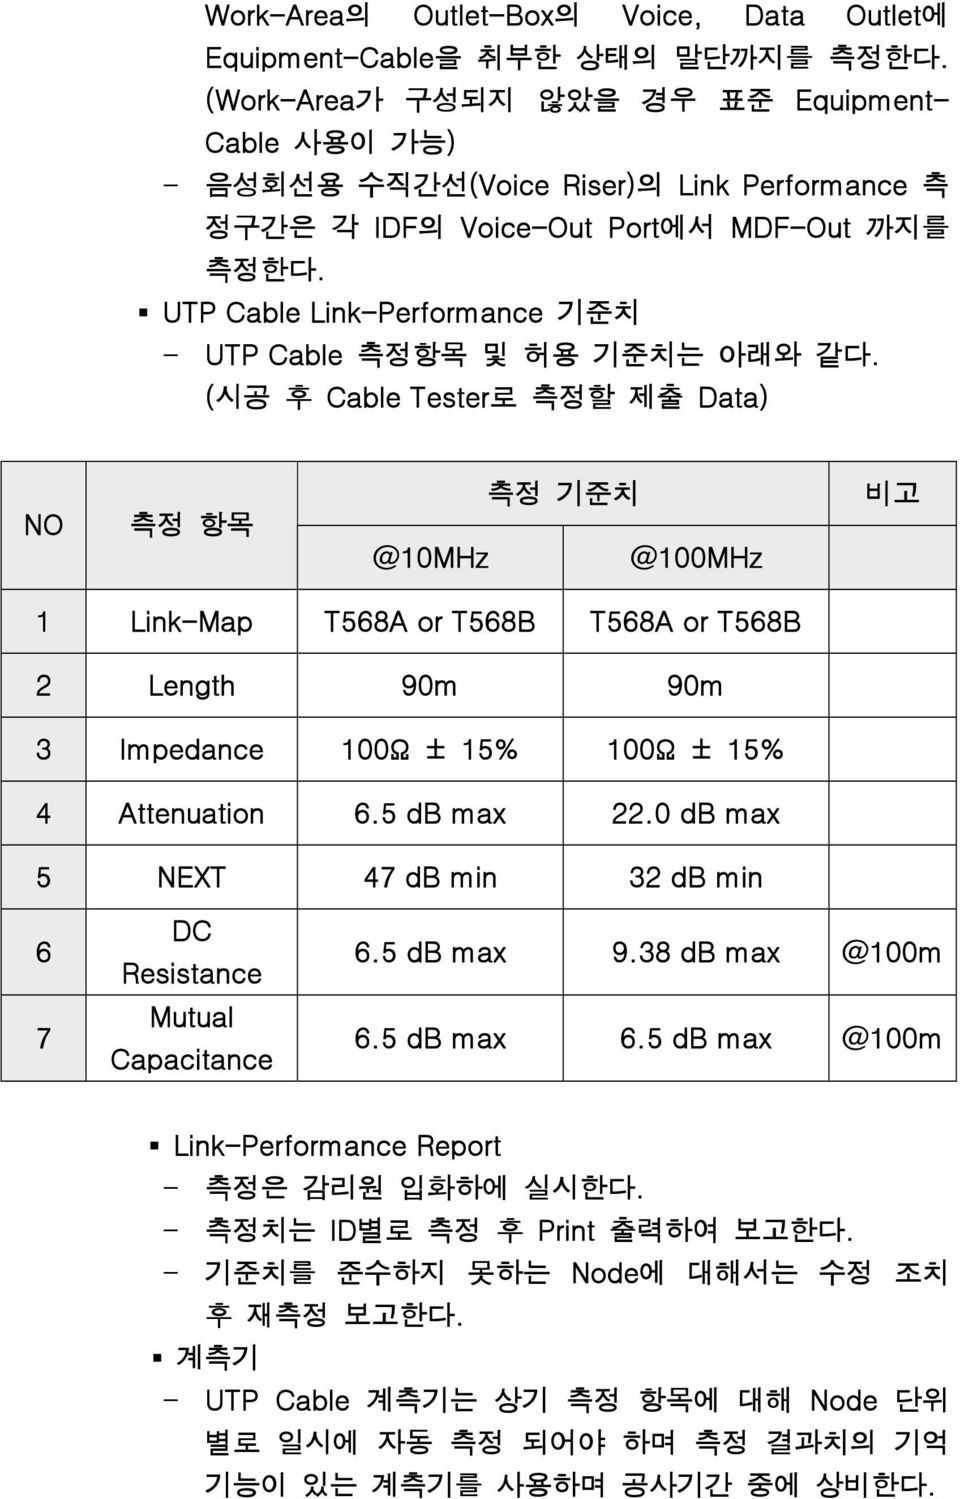 UTP Cable Link-Performance 기준치 - UTP Cable 측정항목 및 허용 기준치는 아래와 같다.